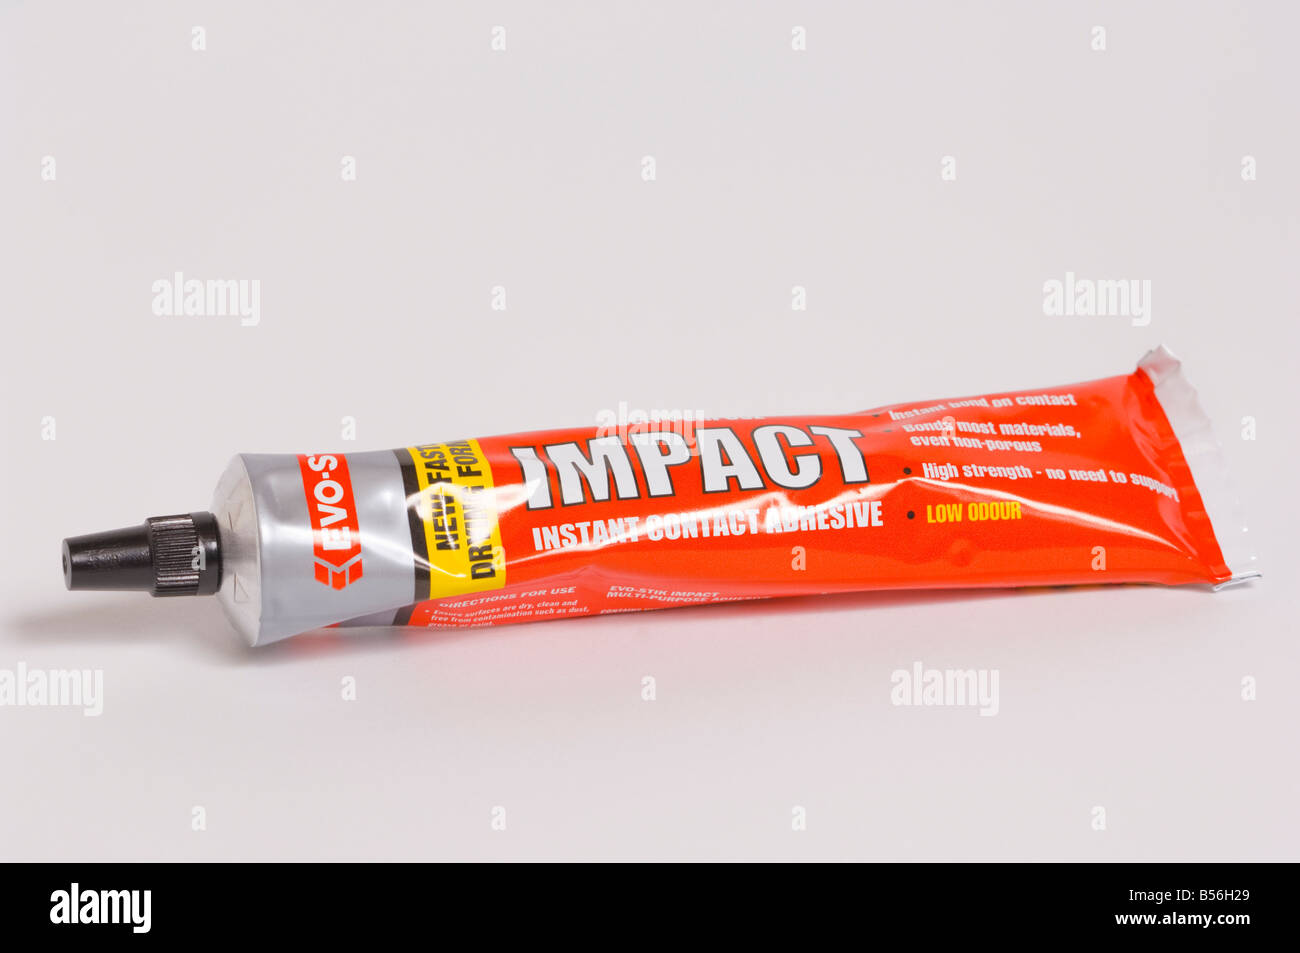 Tube of Evo-Stik impact multi-purpose instant contact adhesive glue on white background Stock Photo